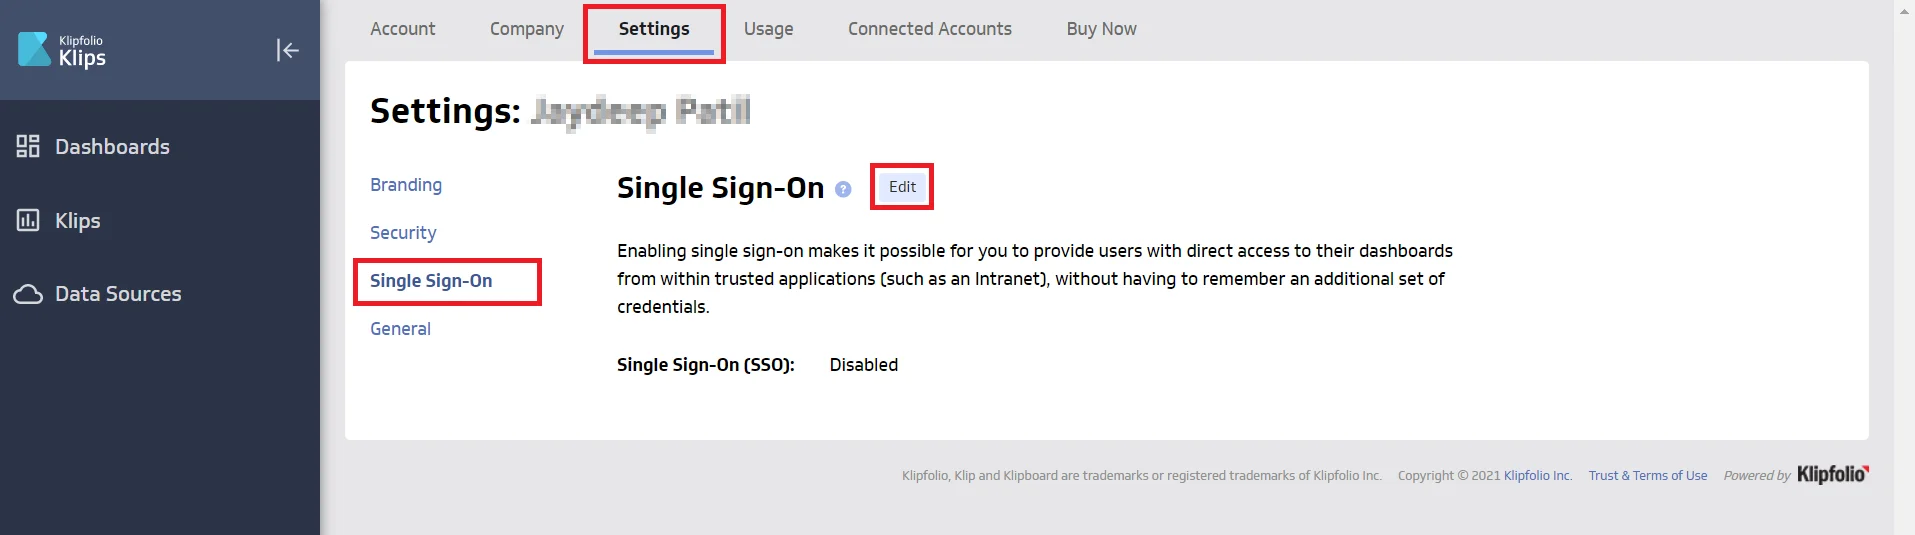  Integration of Klipfolio SAML Single Sign-On using Joomla as IDP 